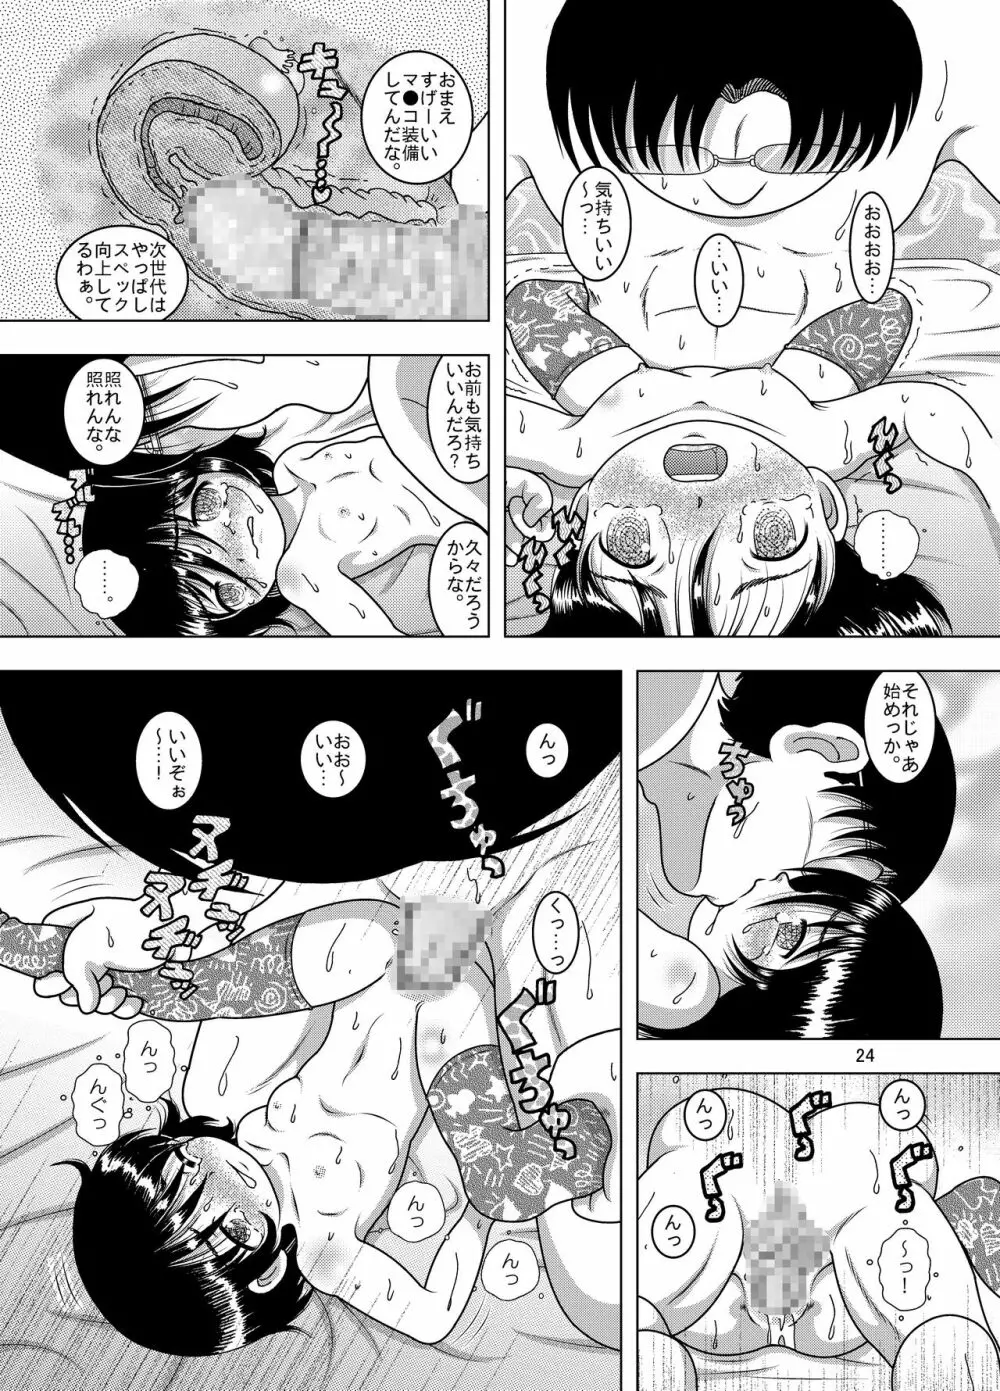 蠱惑甘柑 - page25